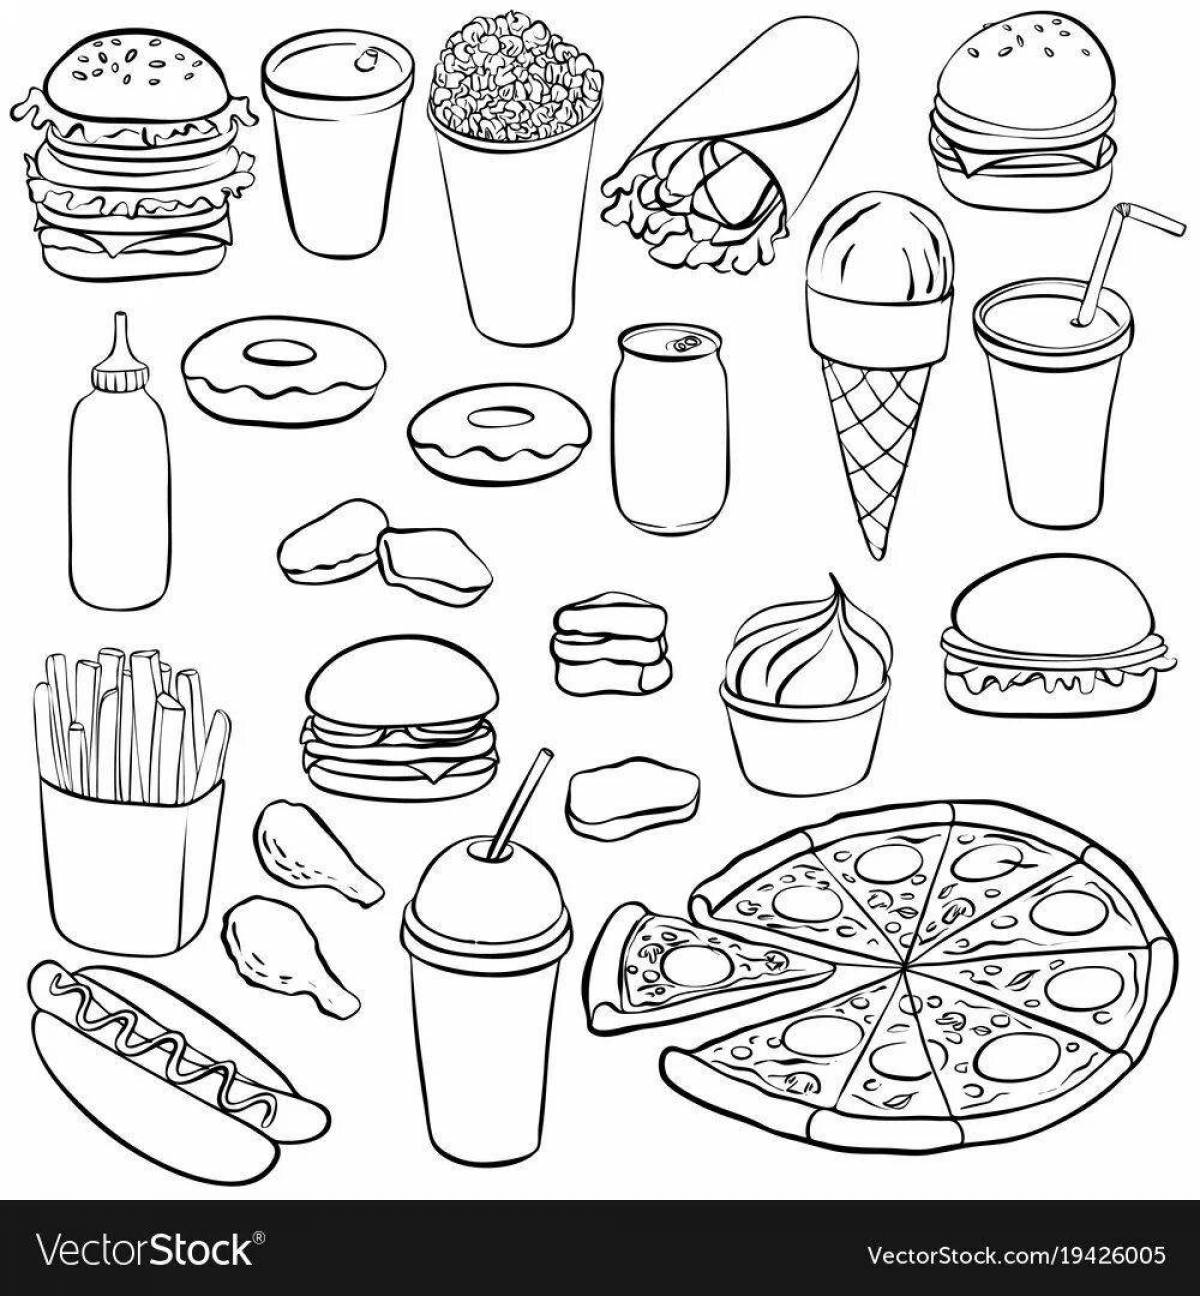 Delicious mcdonald's food coloring page